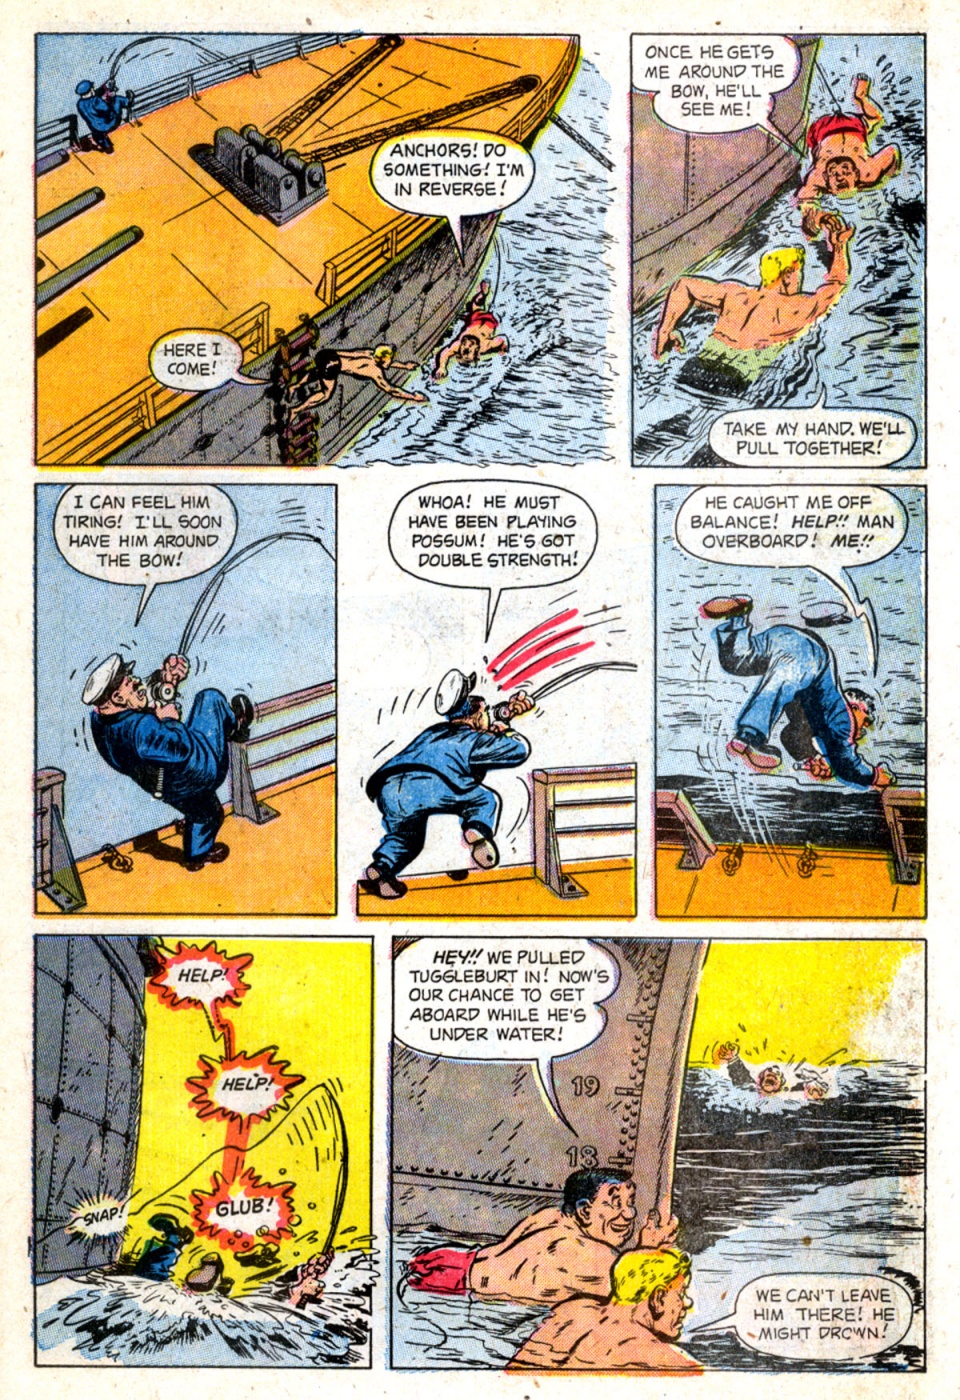 Anchors the Salt Water Daffy - Comics (b) (23)